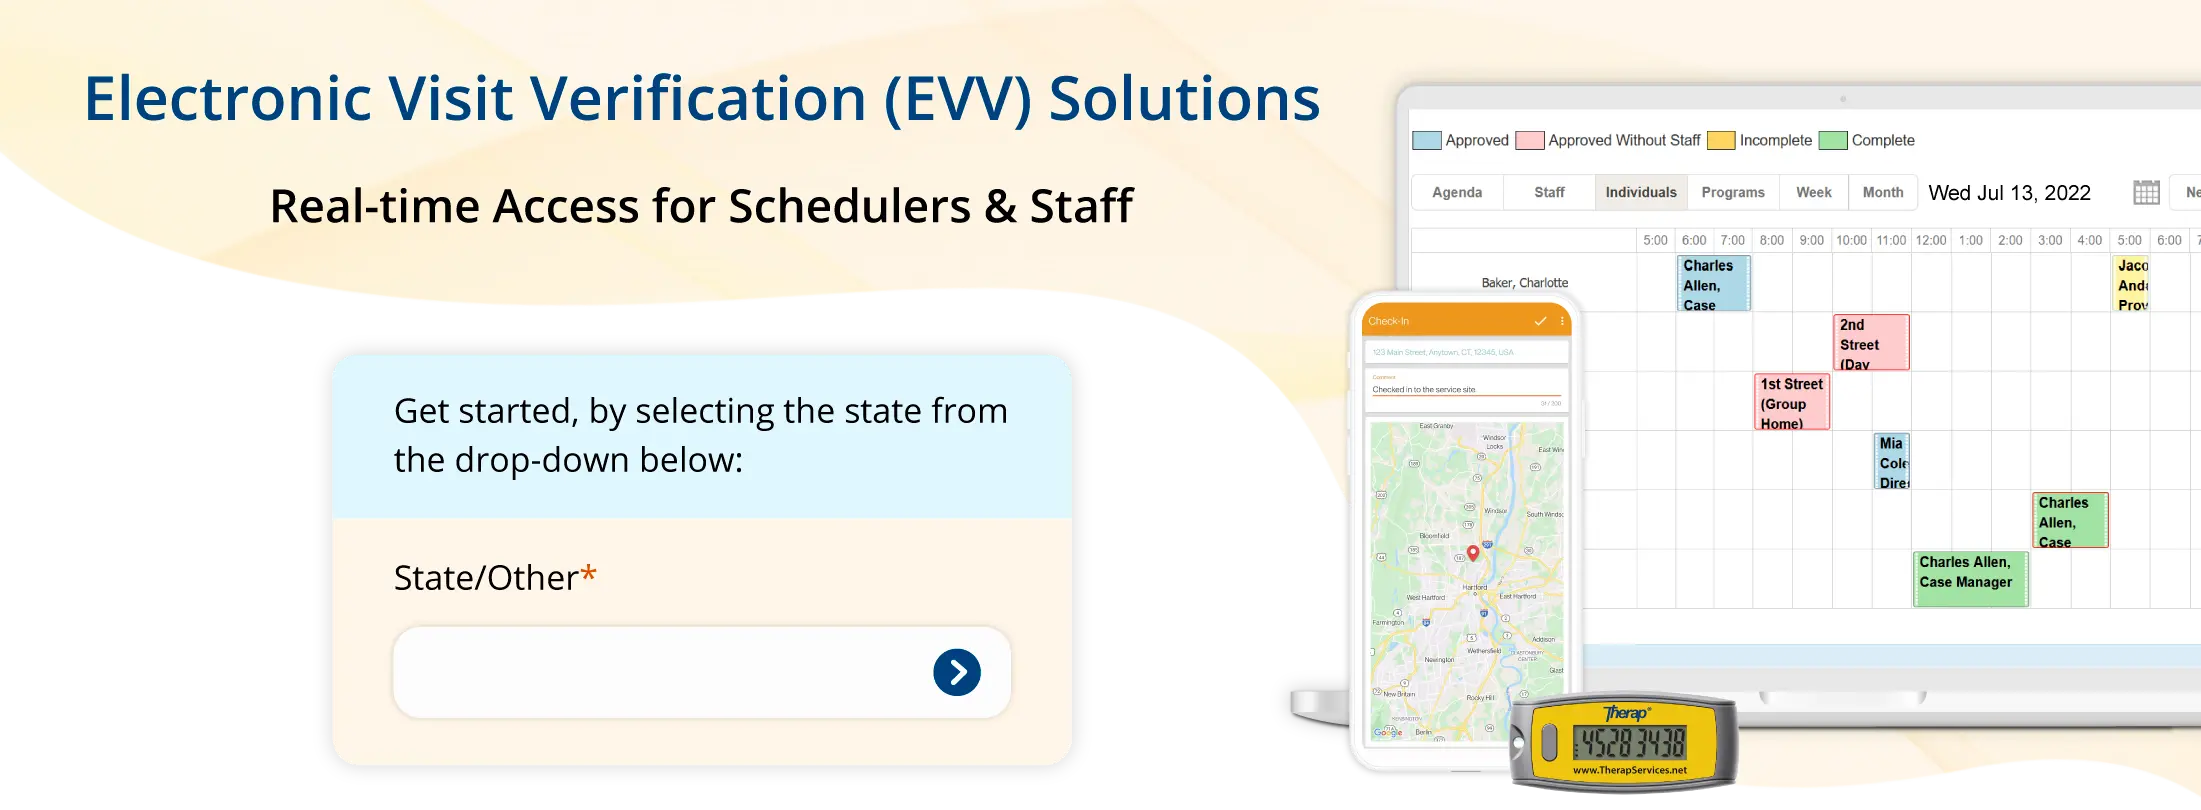 Electronic Visit Verification (EVV) Solutions